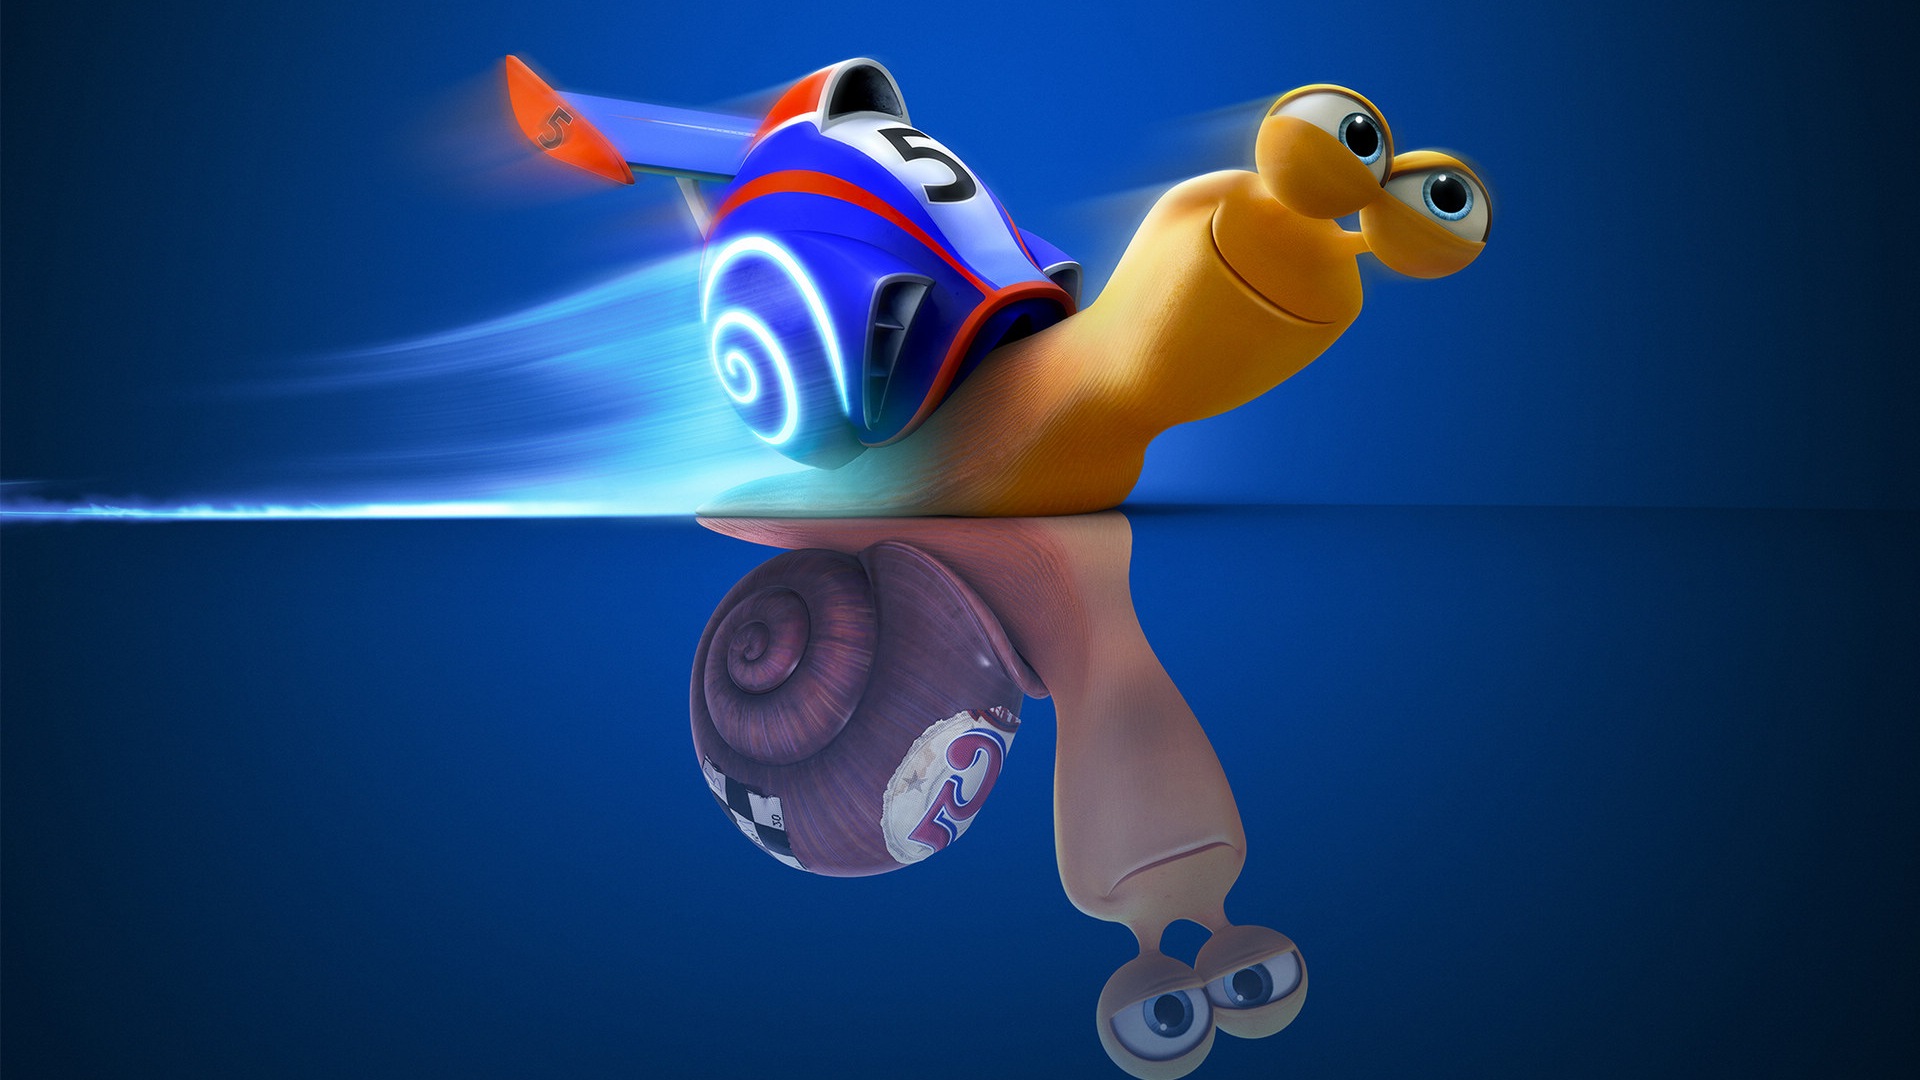 Turbo 极速蜗牛3D电影 高清壁纸4 - 1920x1080